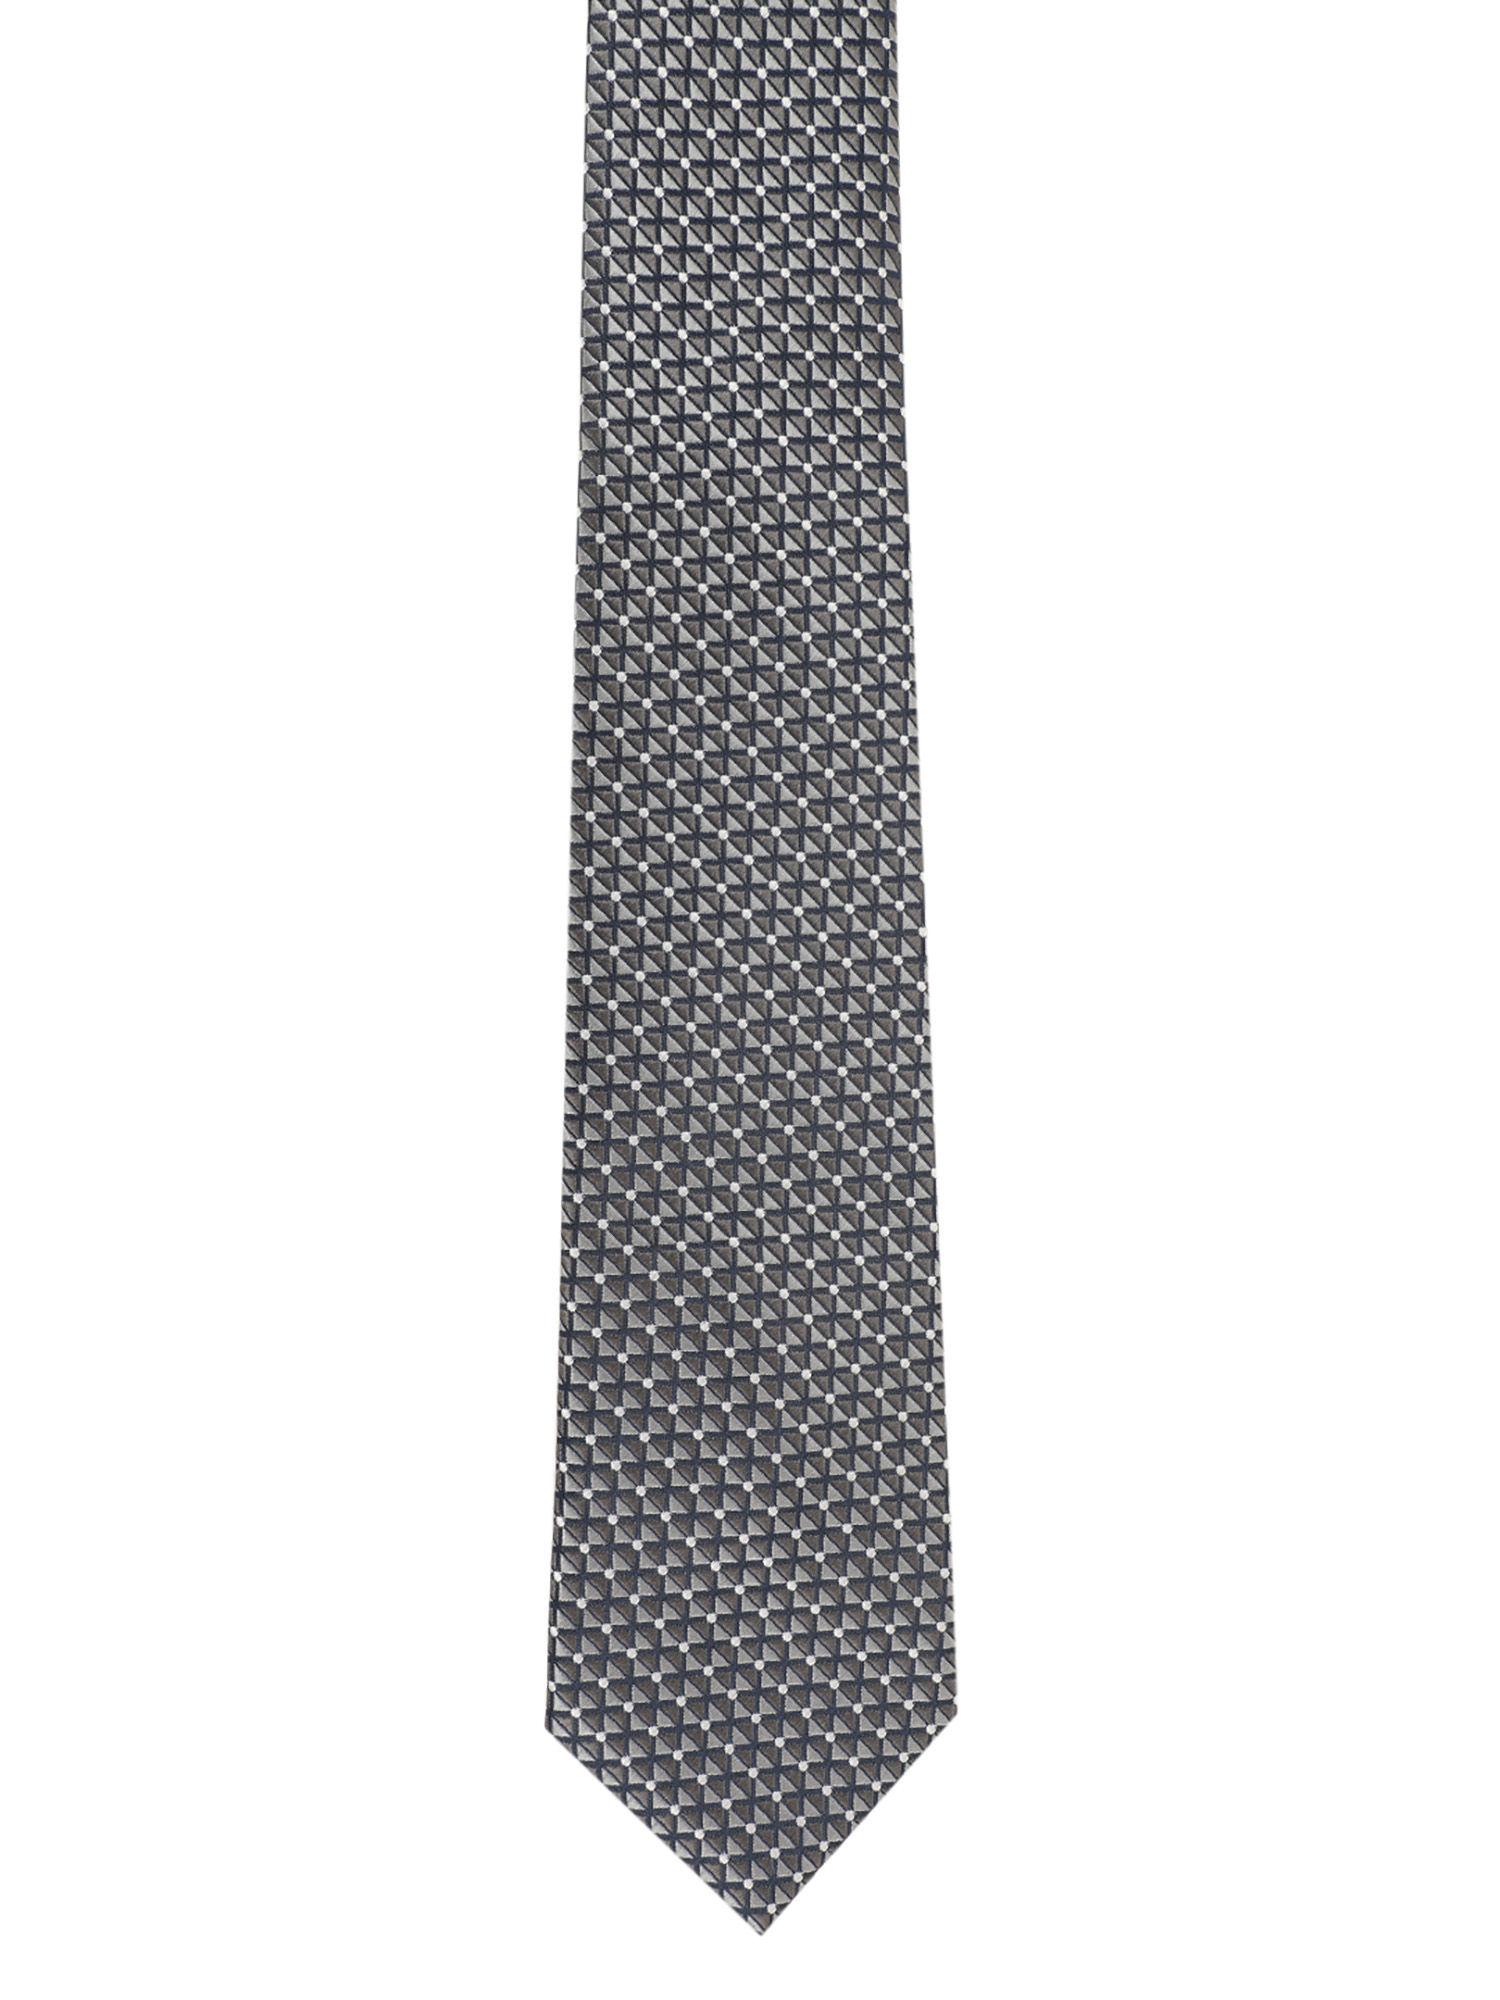 mens necktie